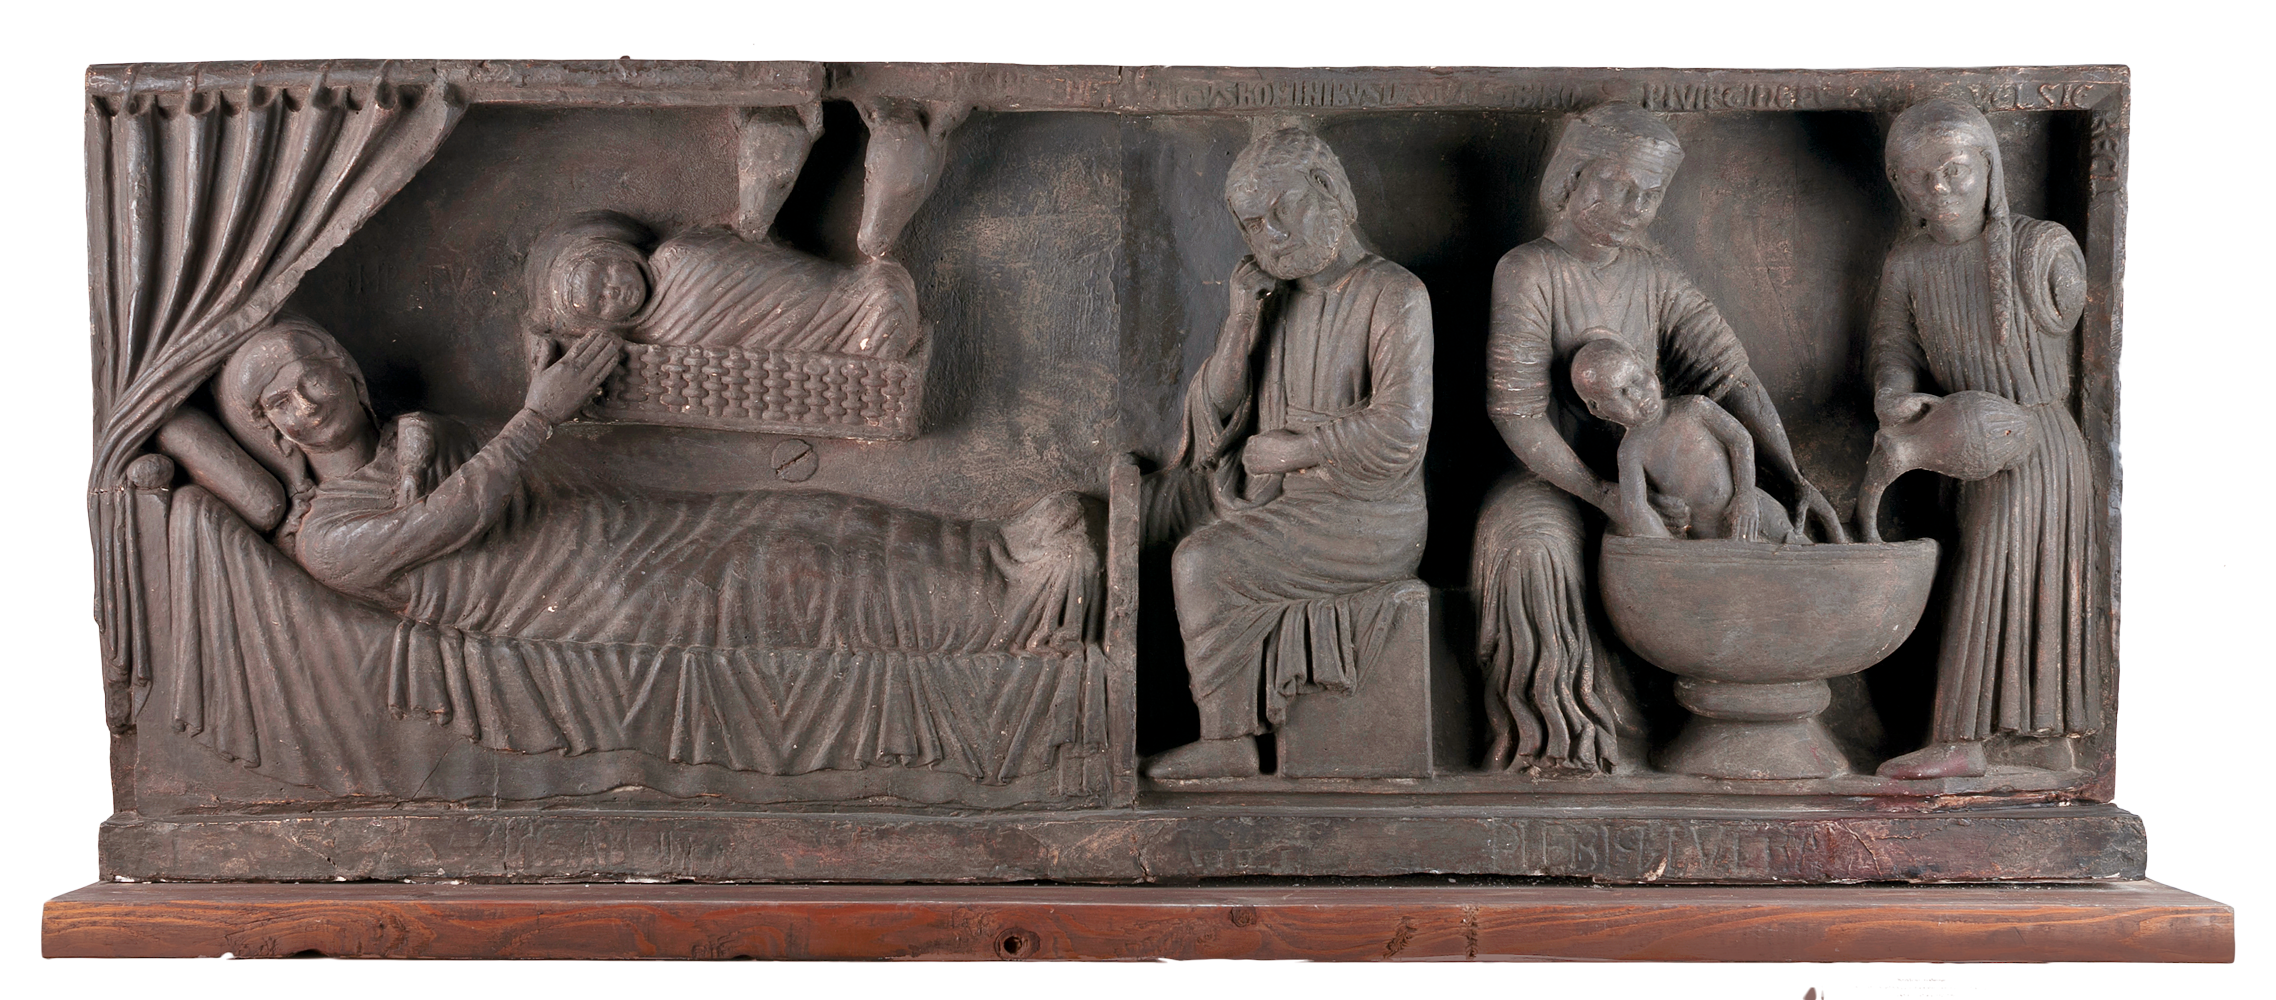 The Nativity, 13th century, plaster cast, HZ-186 